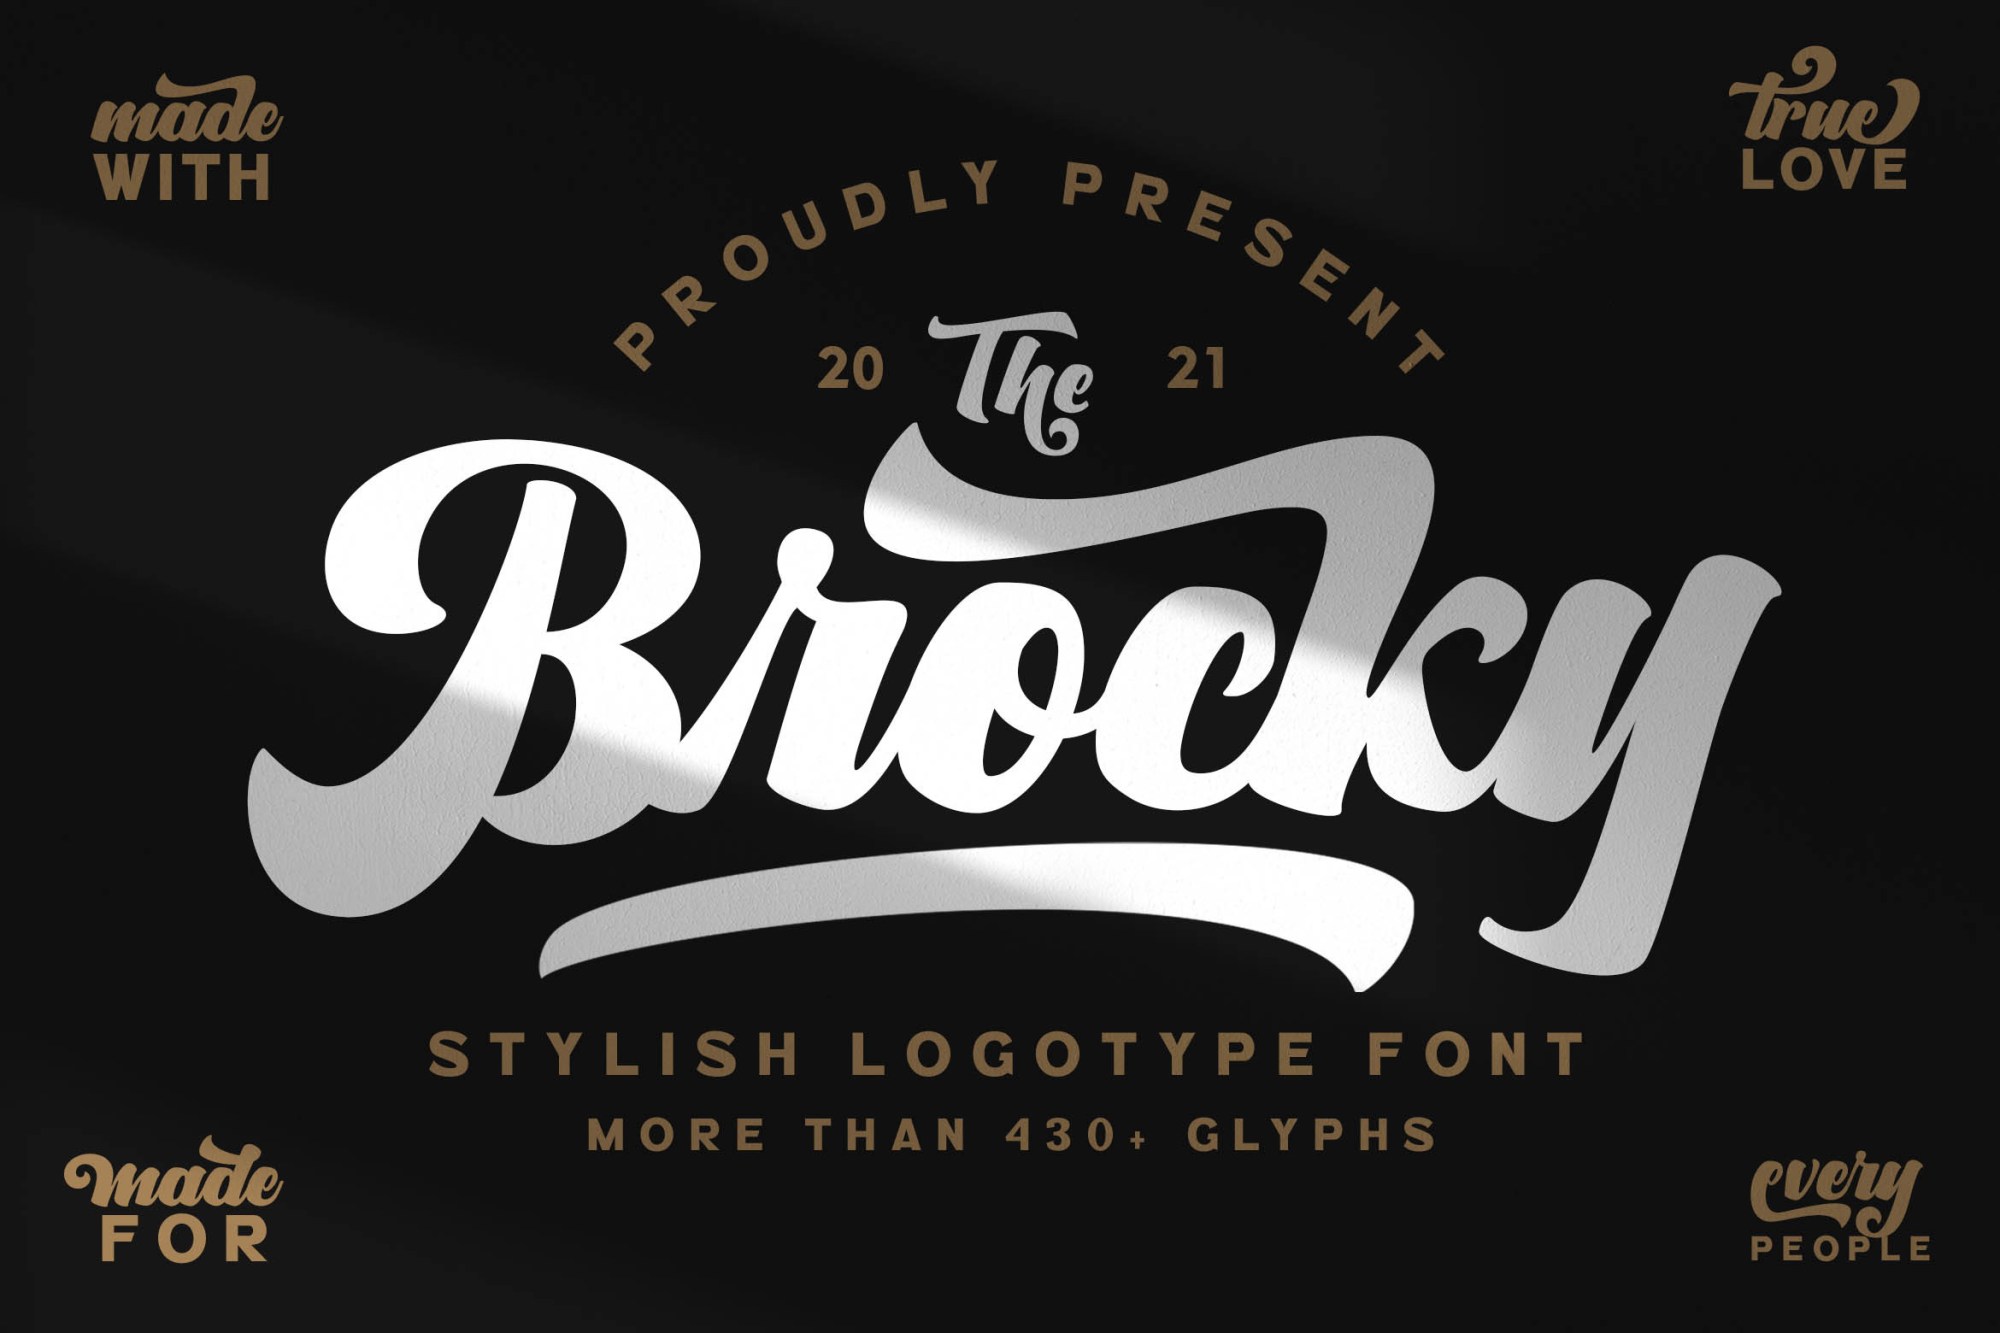 The Brocky Font